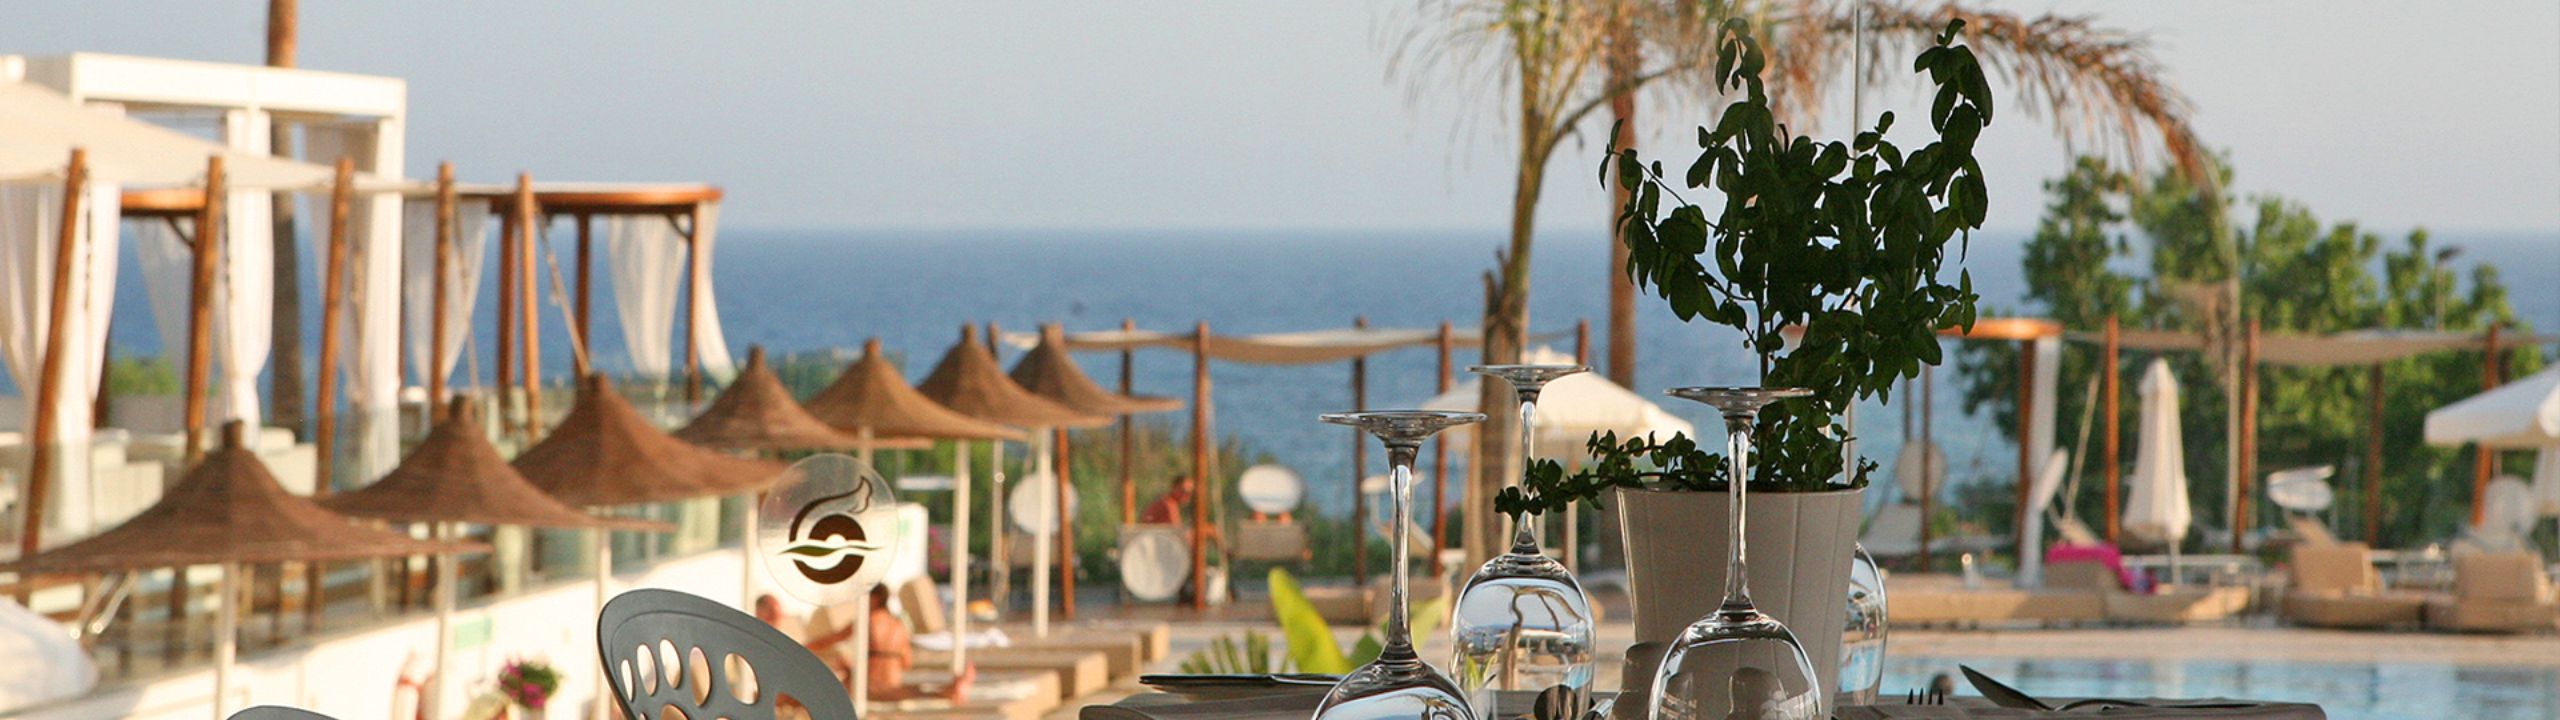 Napa Mermaid Hotel & Suites in Agia Napa Cyprus